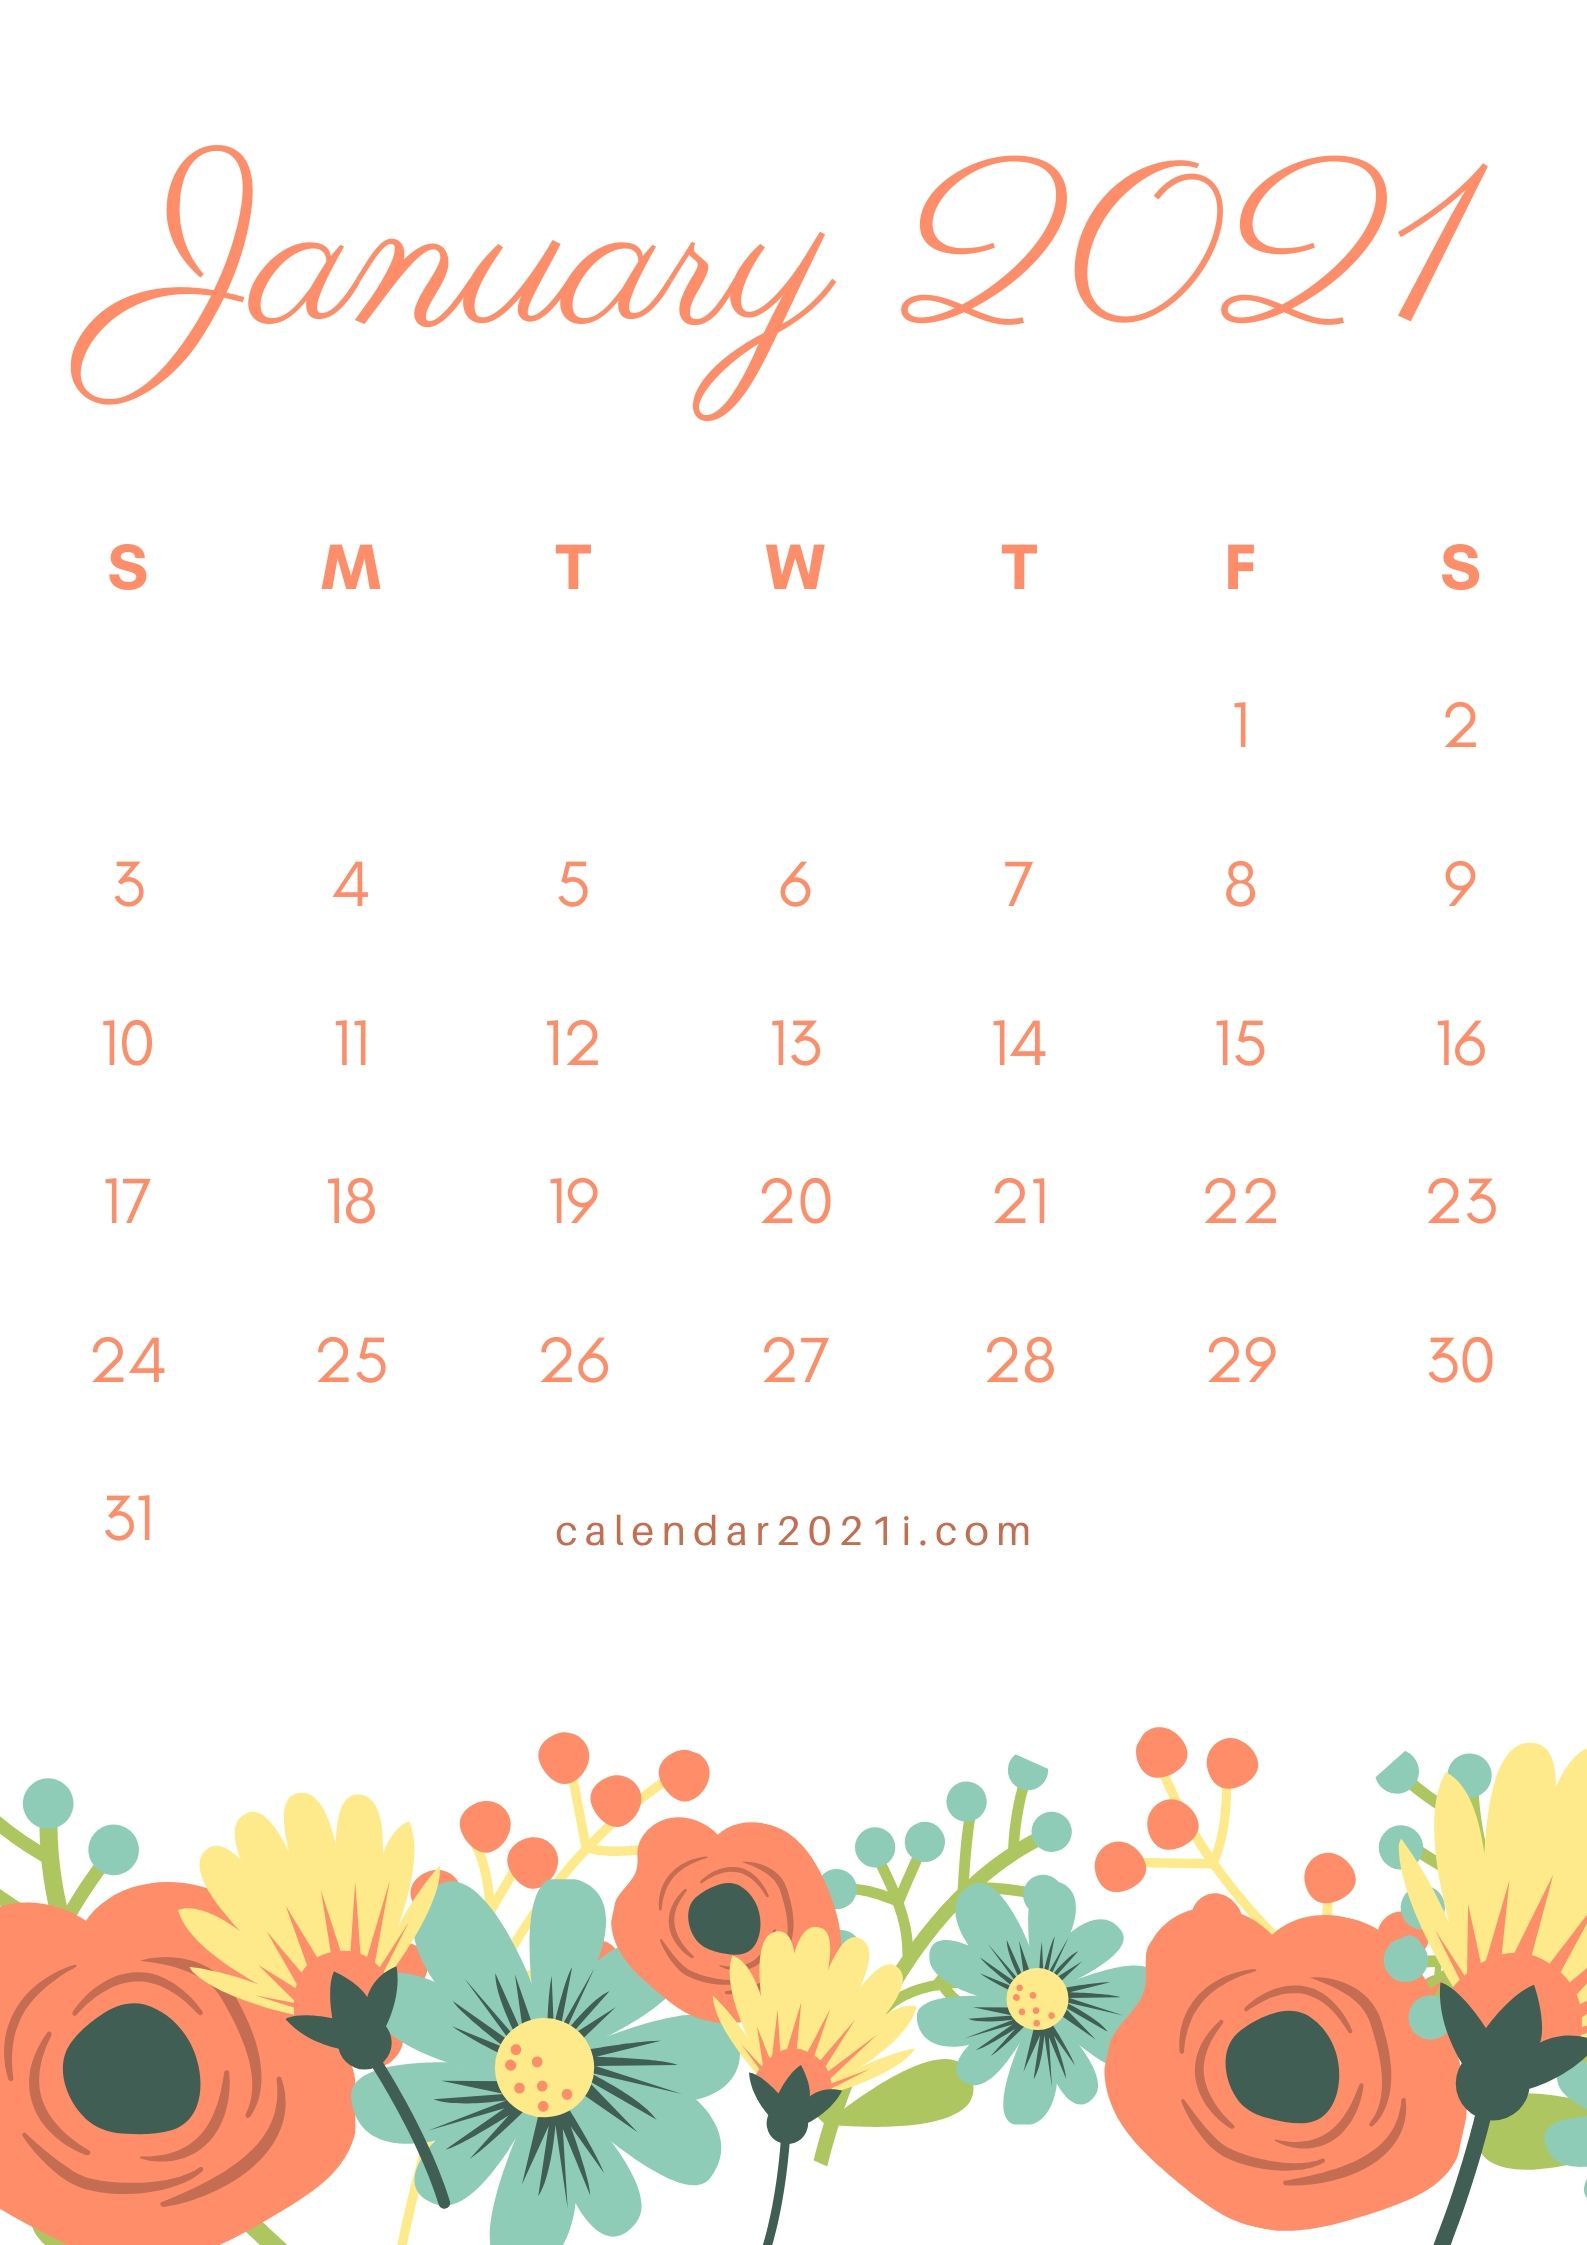 January 2021 Calendar Wallpaper Phone Image ID 2